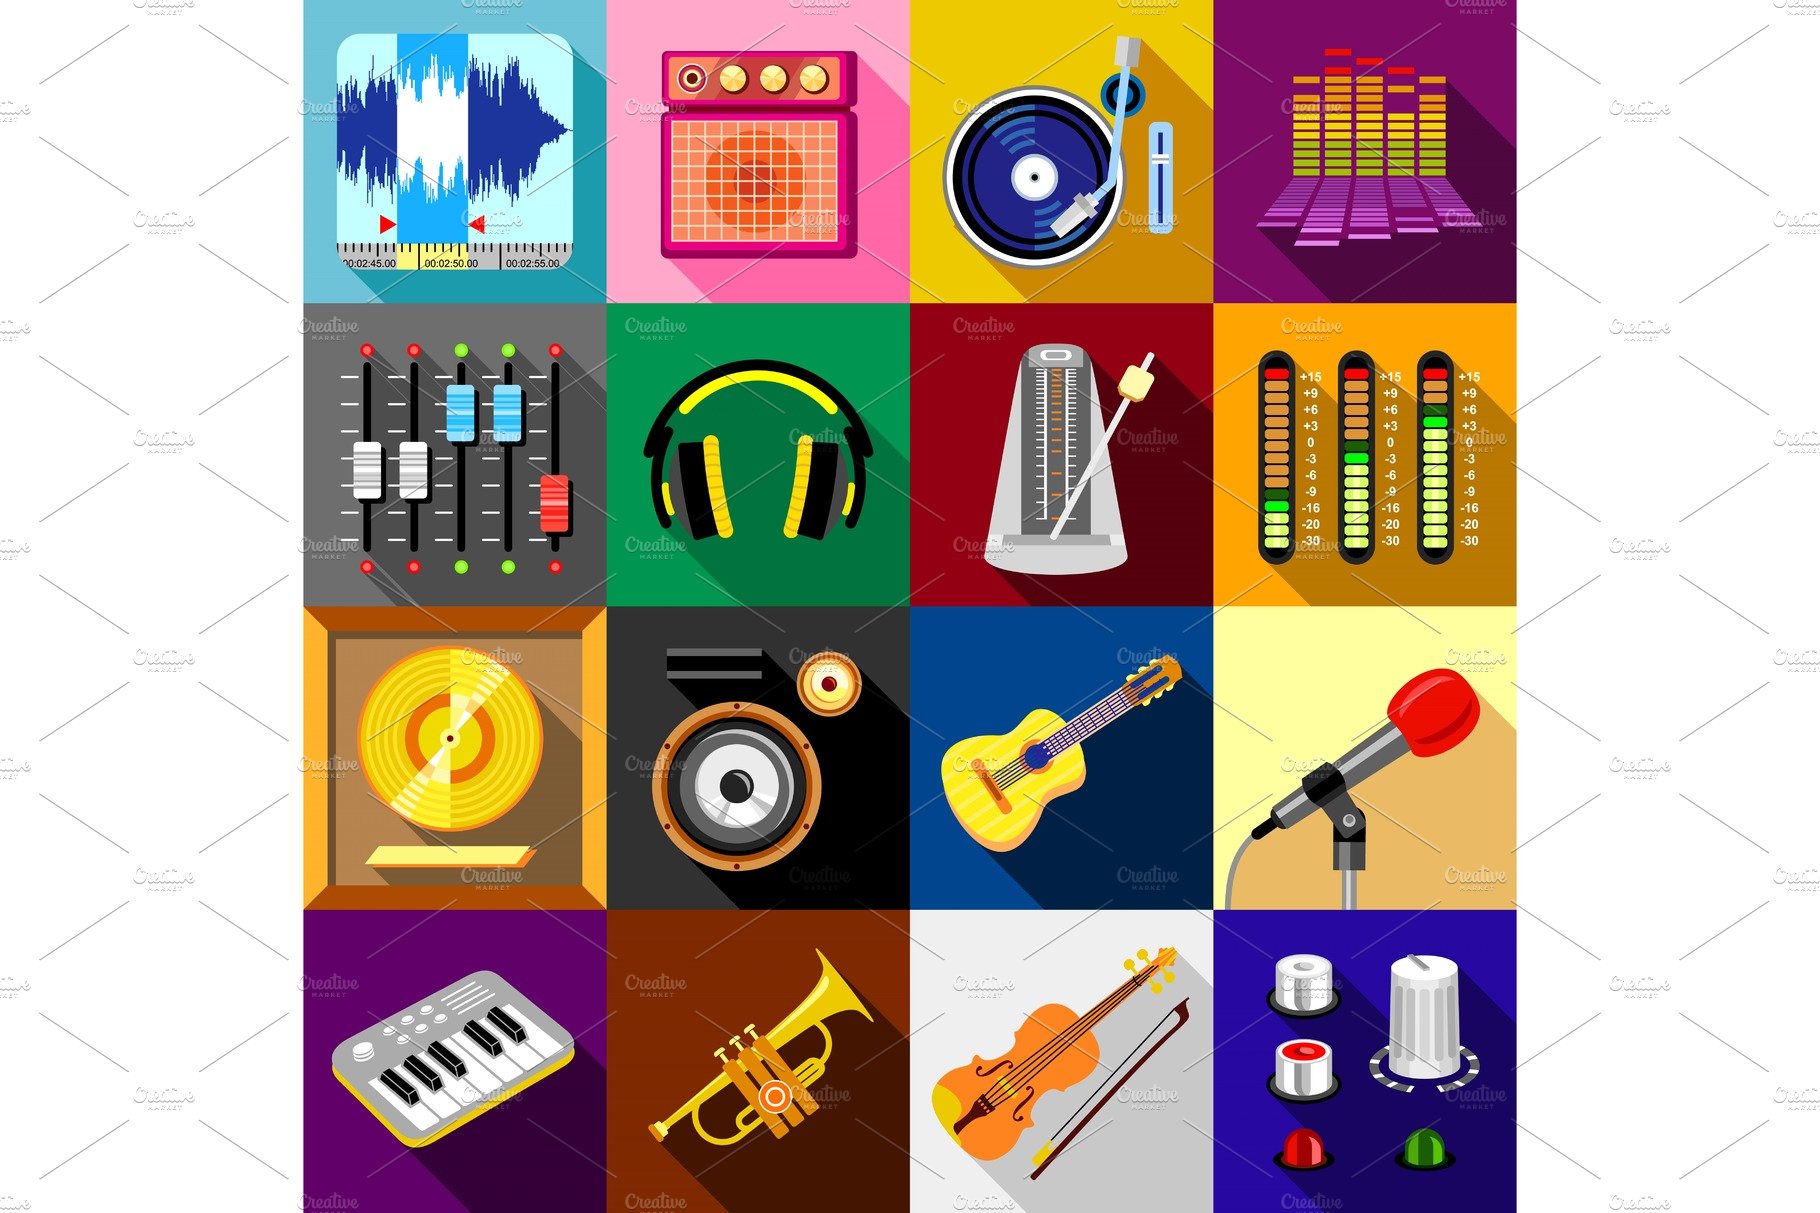 Recording studio symbols icons set cover image.